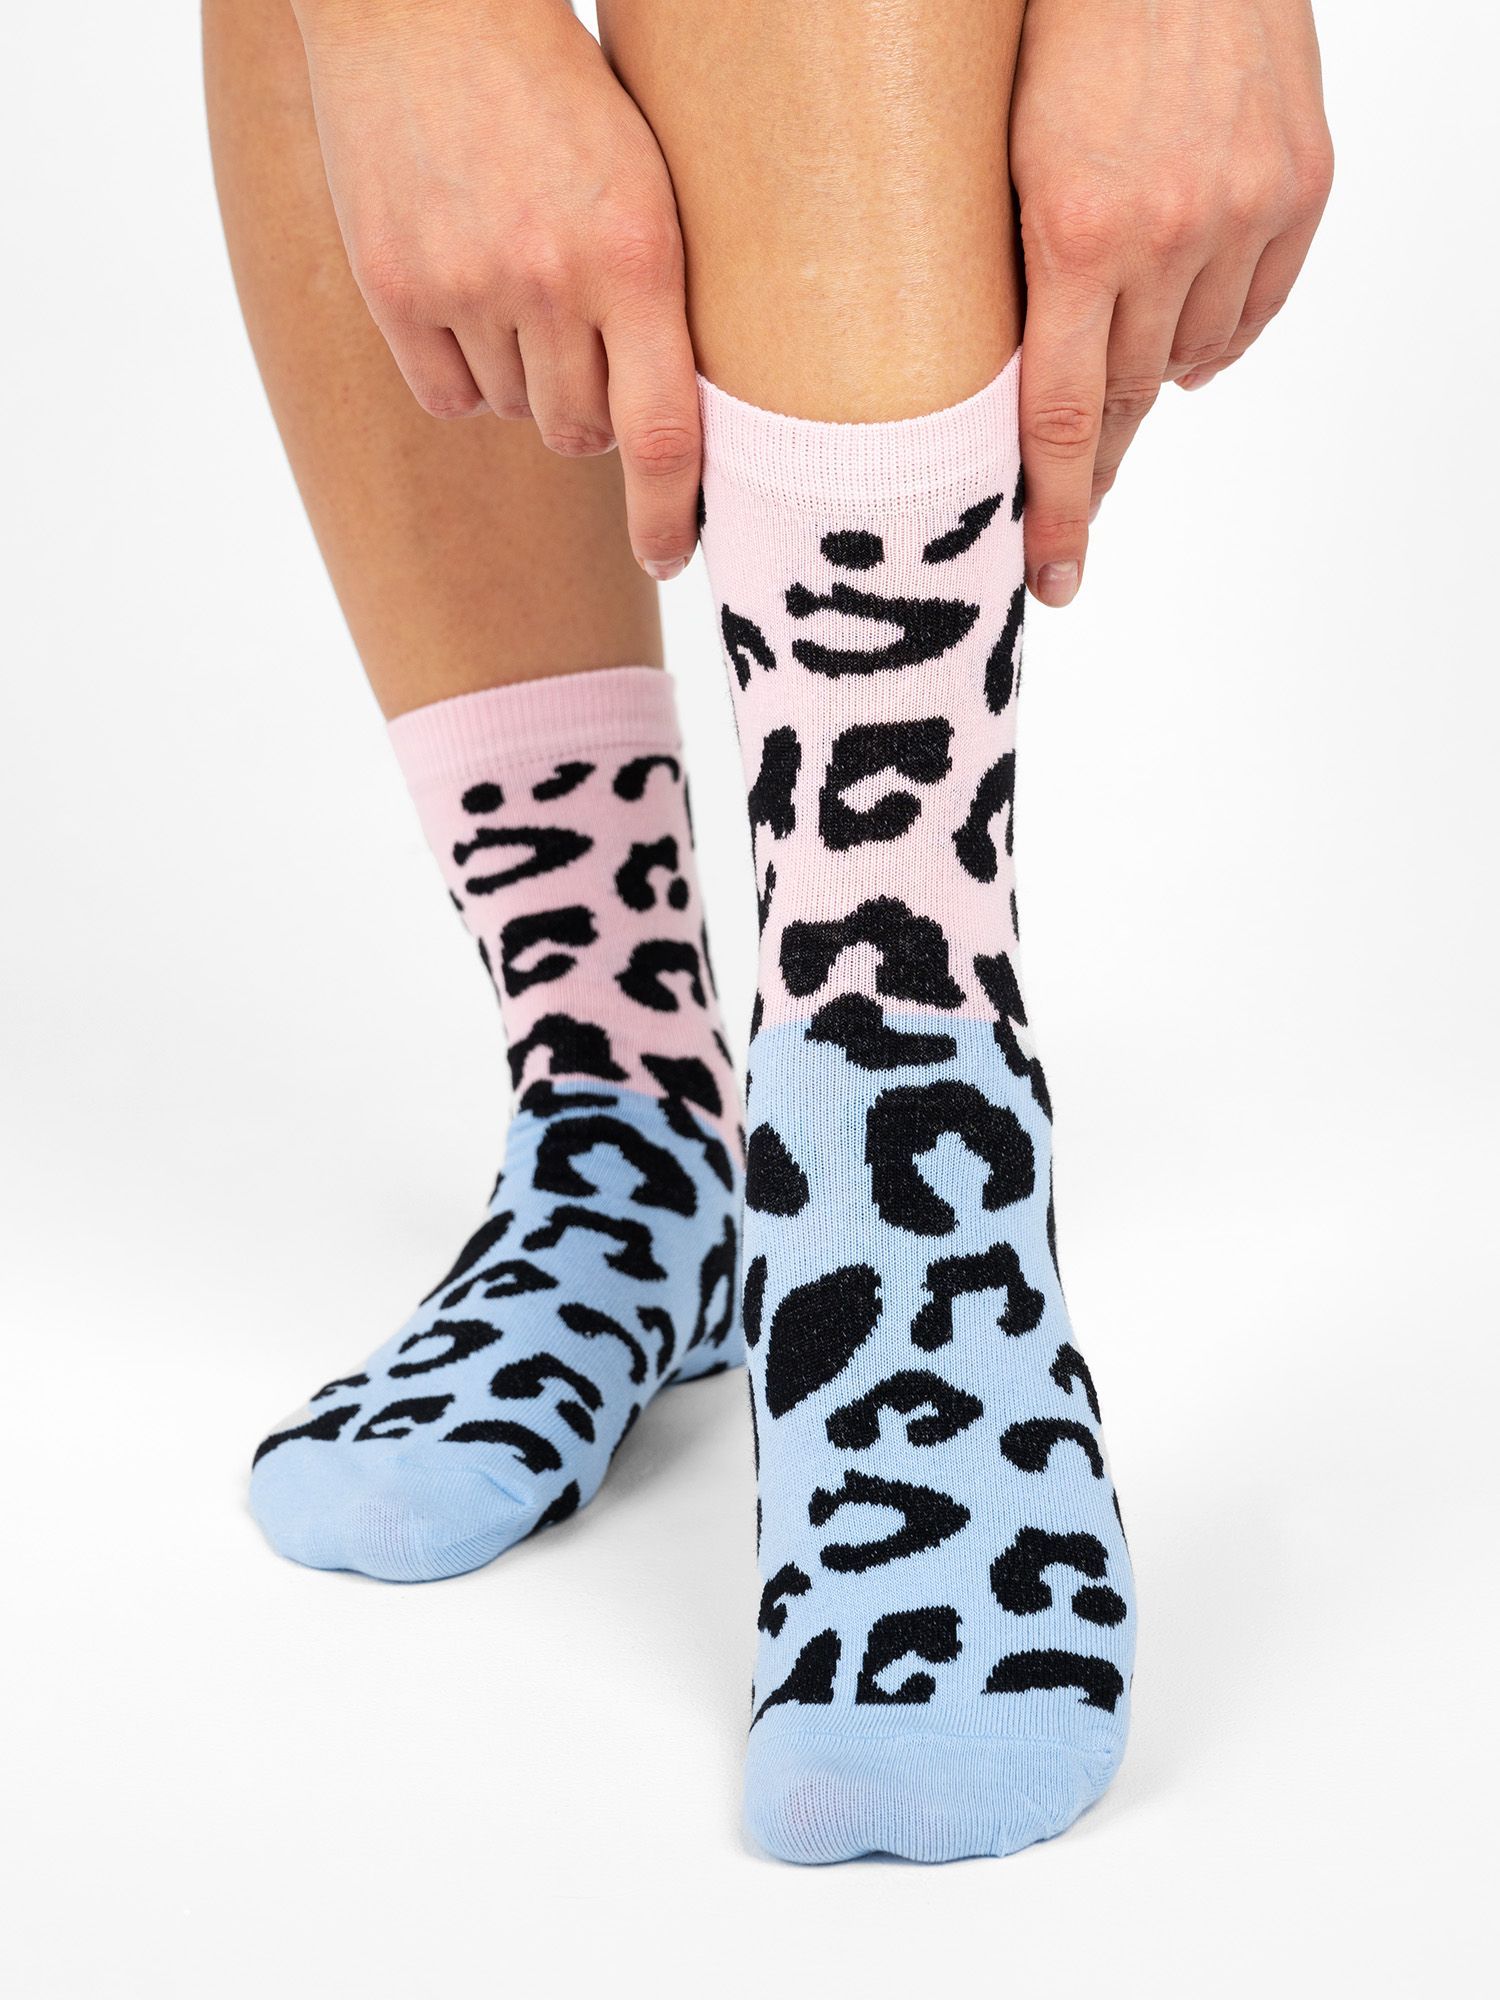 Носки с леопардовым принтом. Леопардовые носки женские. Носки леопардовой расцветки. Леопардовые носки с ботинками.